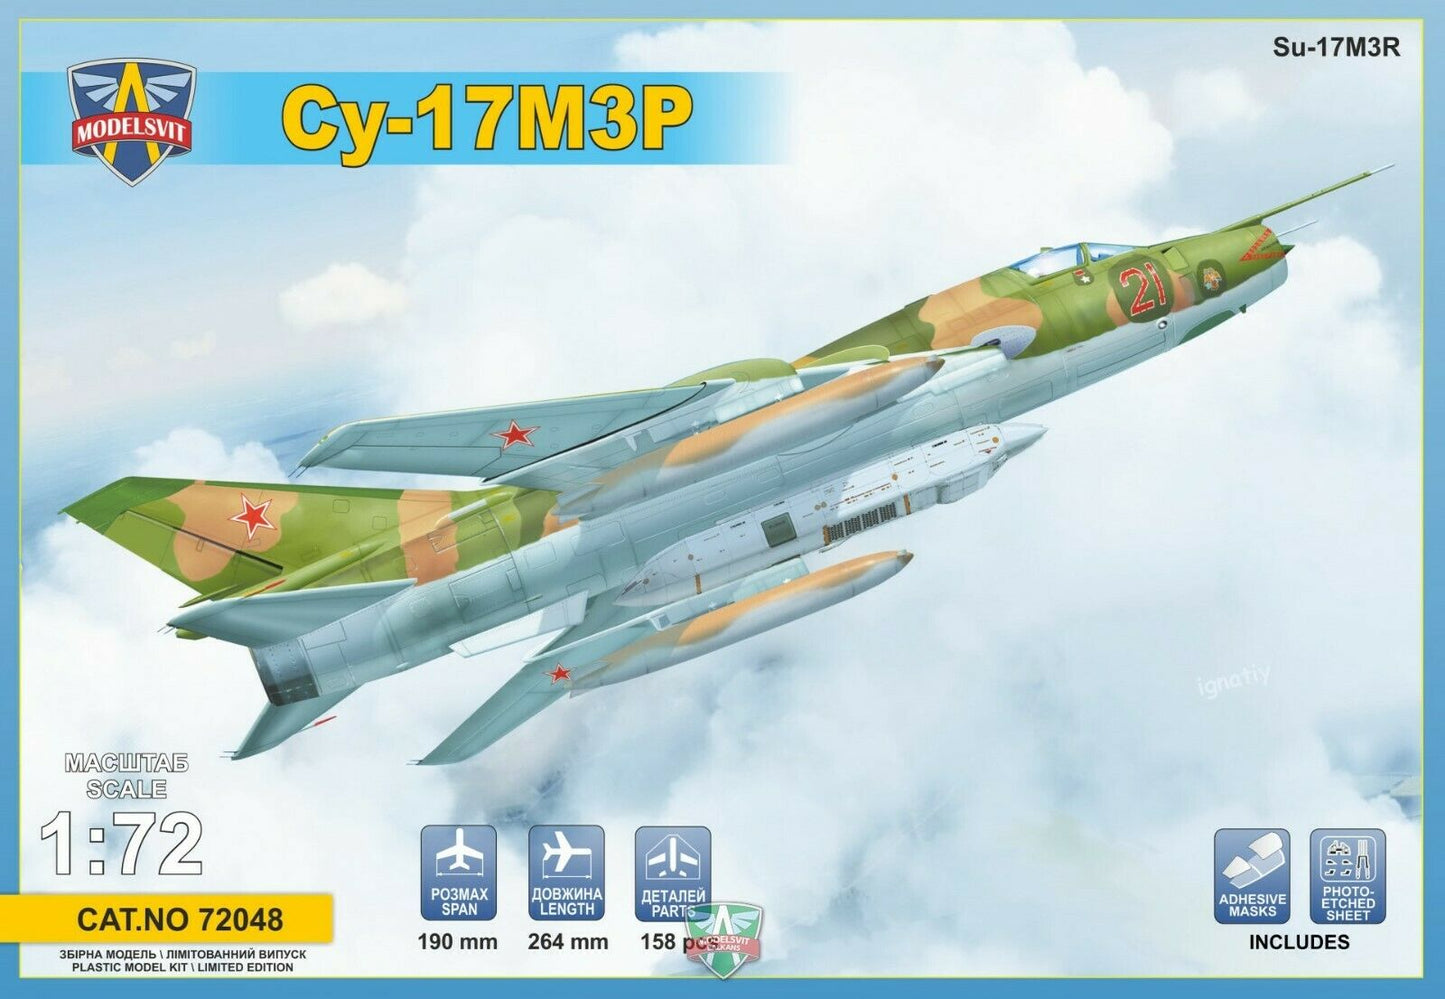 Su-17M3R - MODELSVIT 1/72